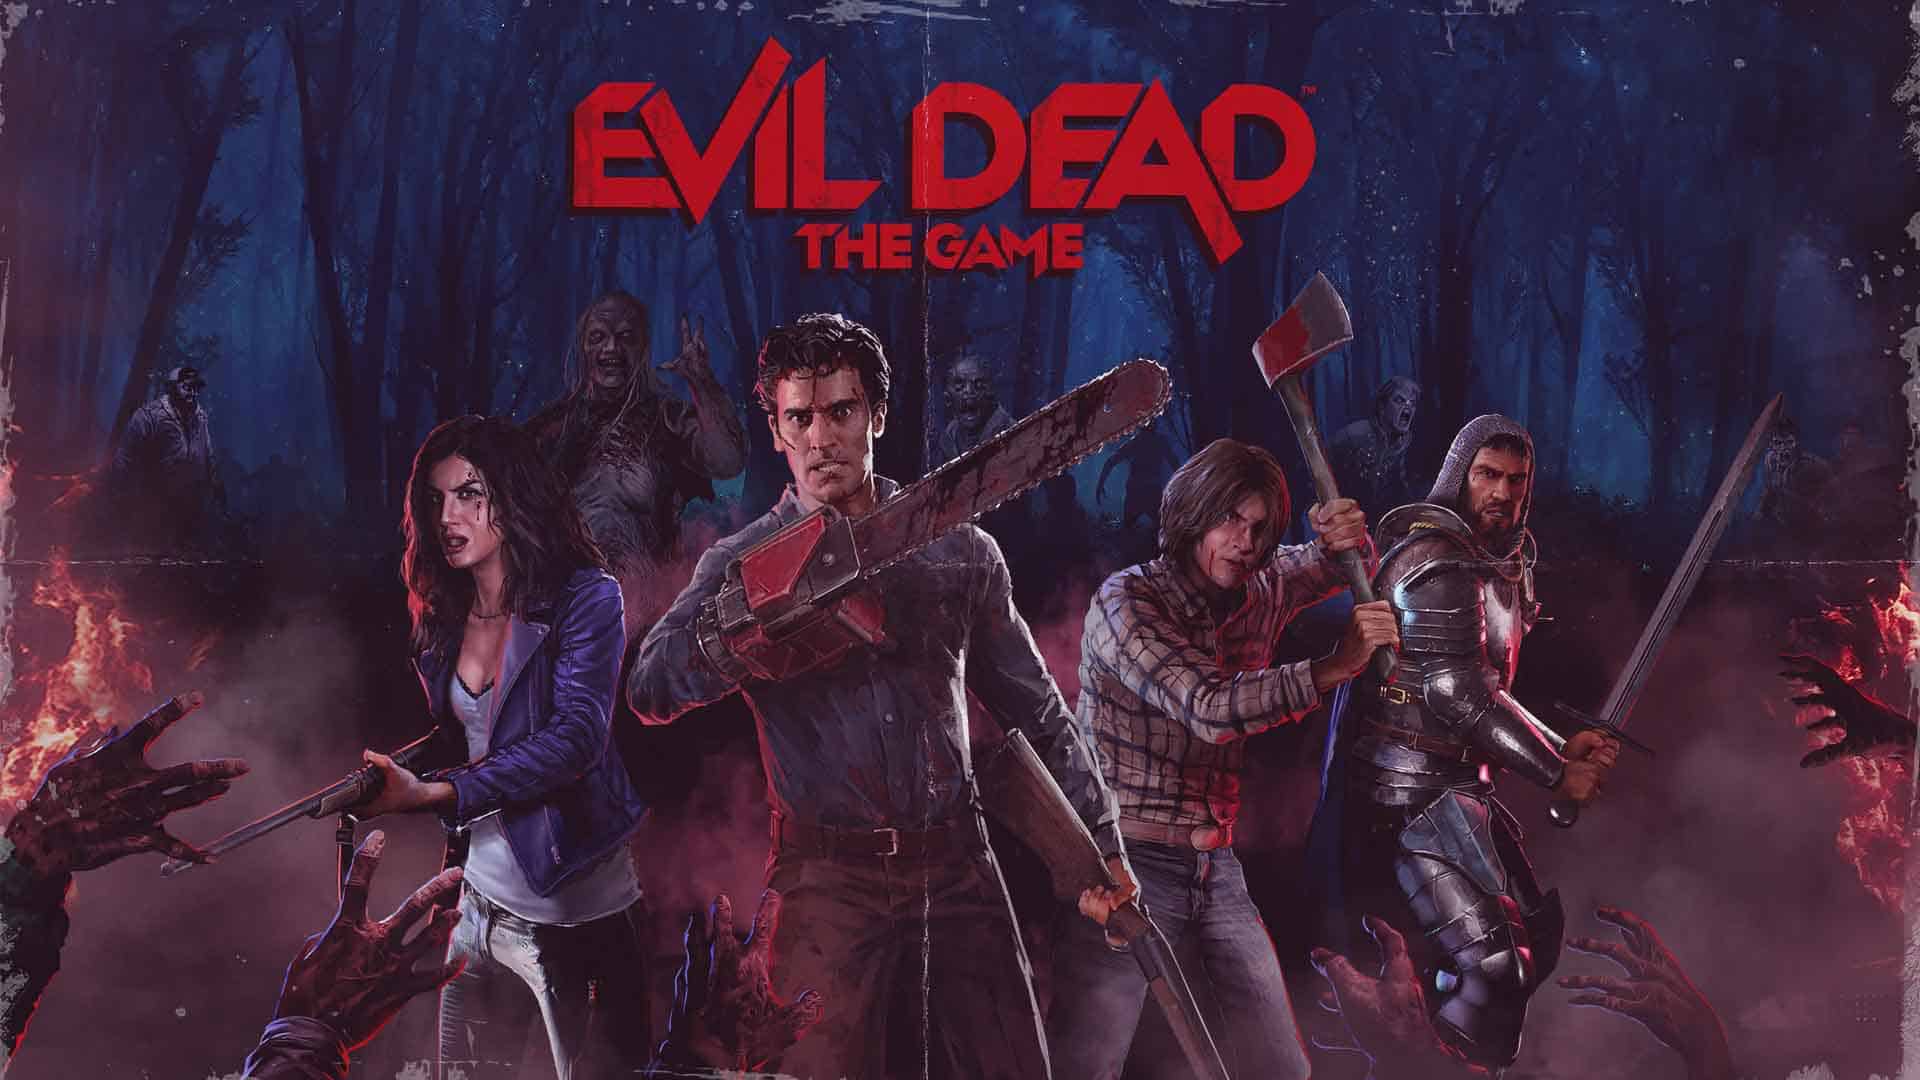 Evil Dead: Regeneration - PS2, Retro Console Games